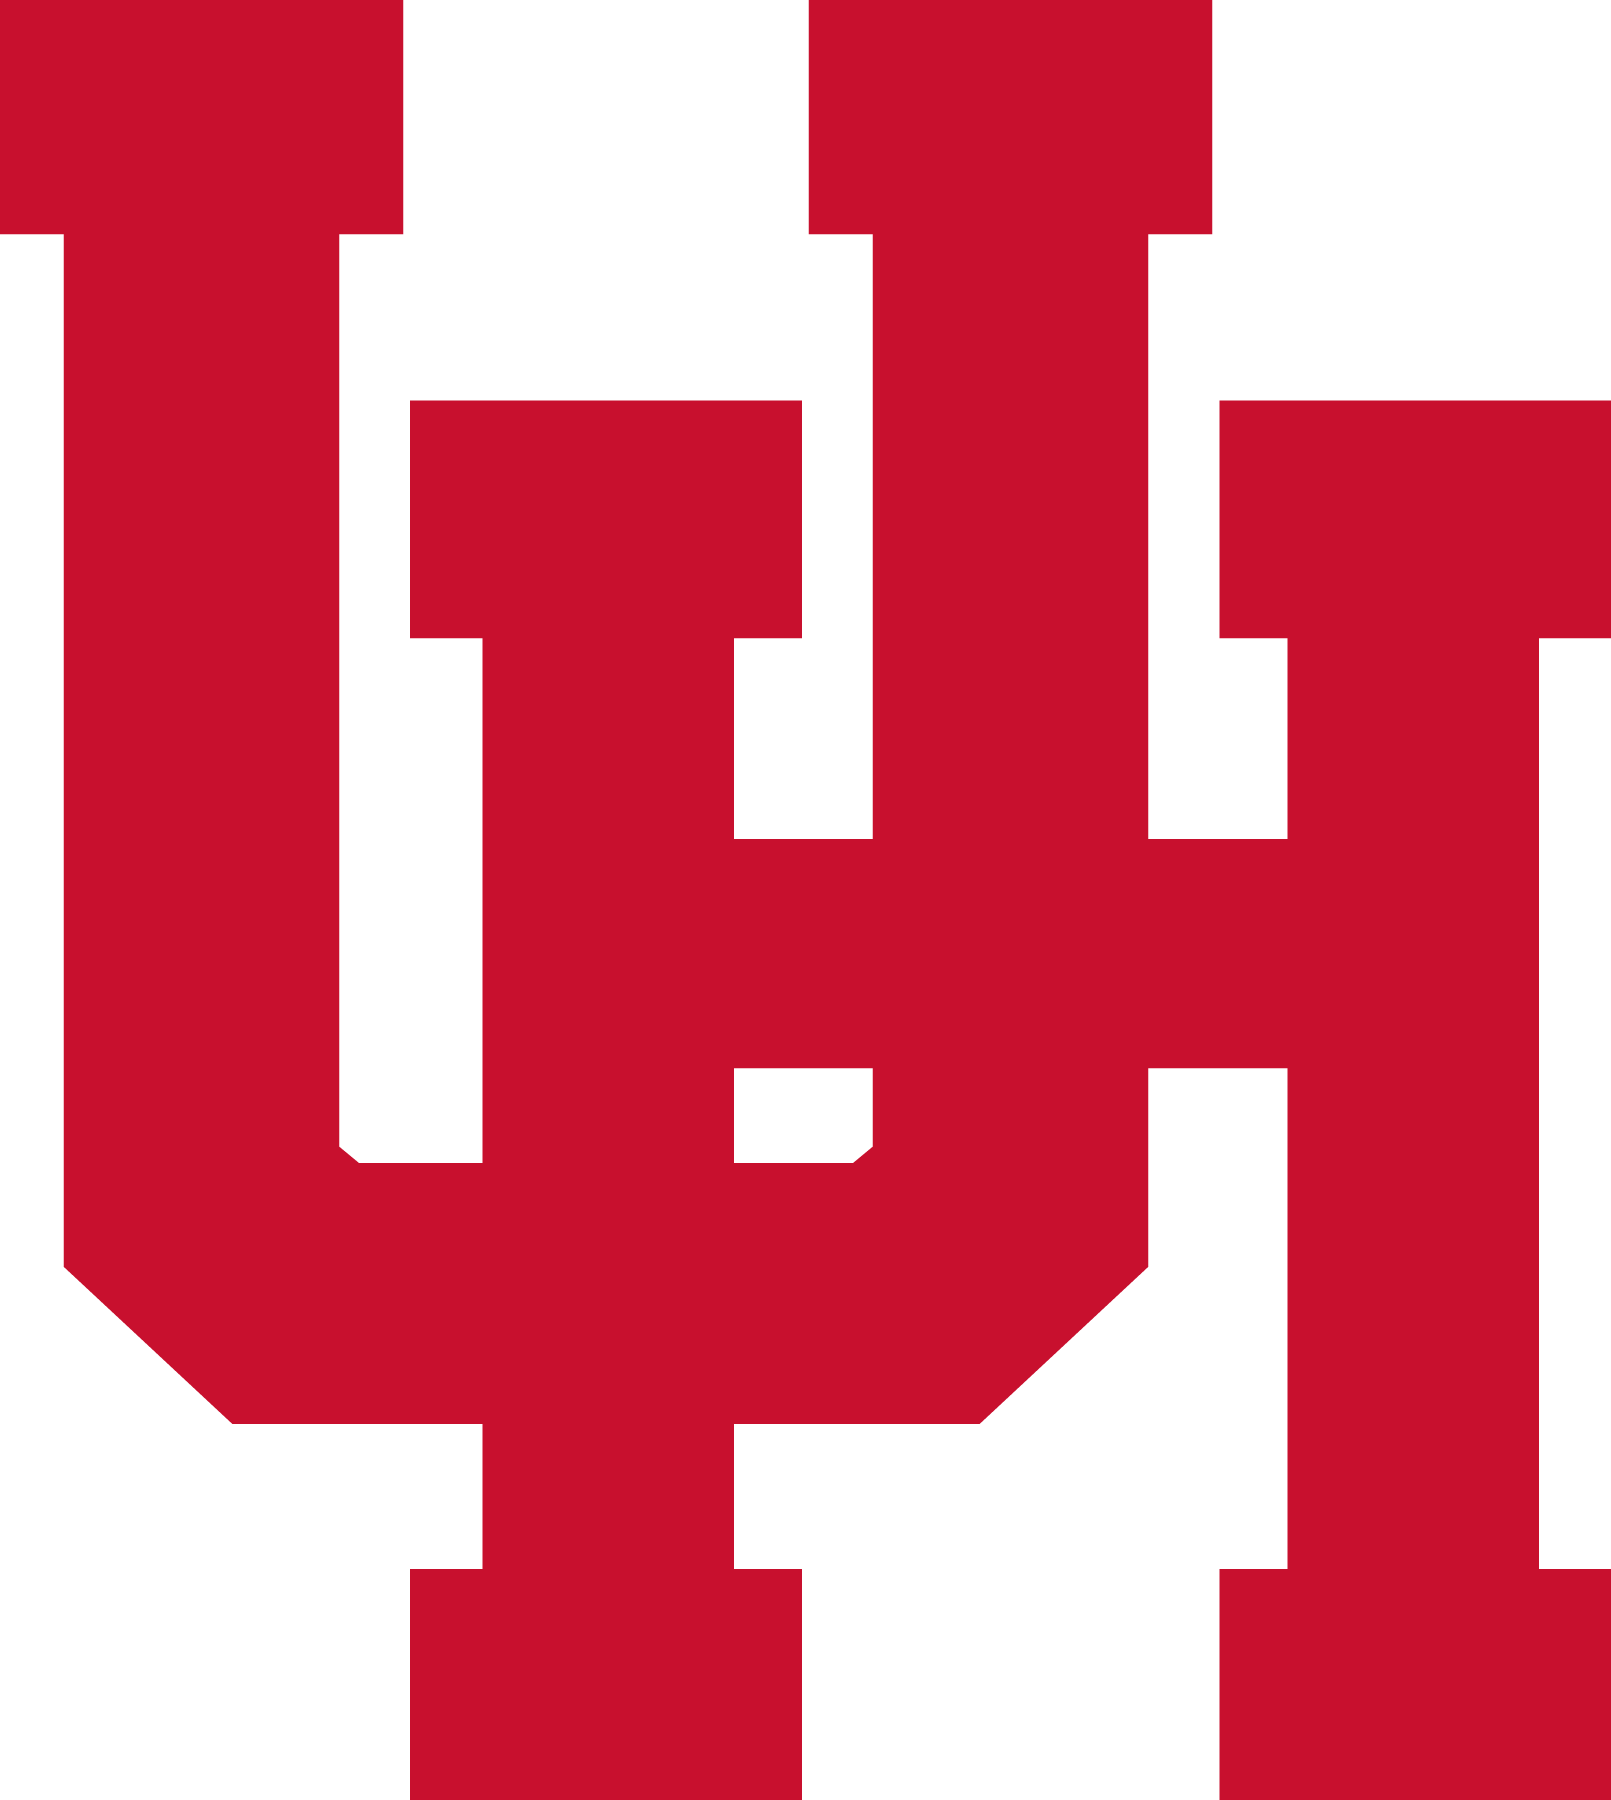 Collegiate Logo - File:University of Houston Collegiate Logo.png - Wikimedia Commons